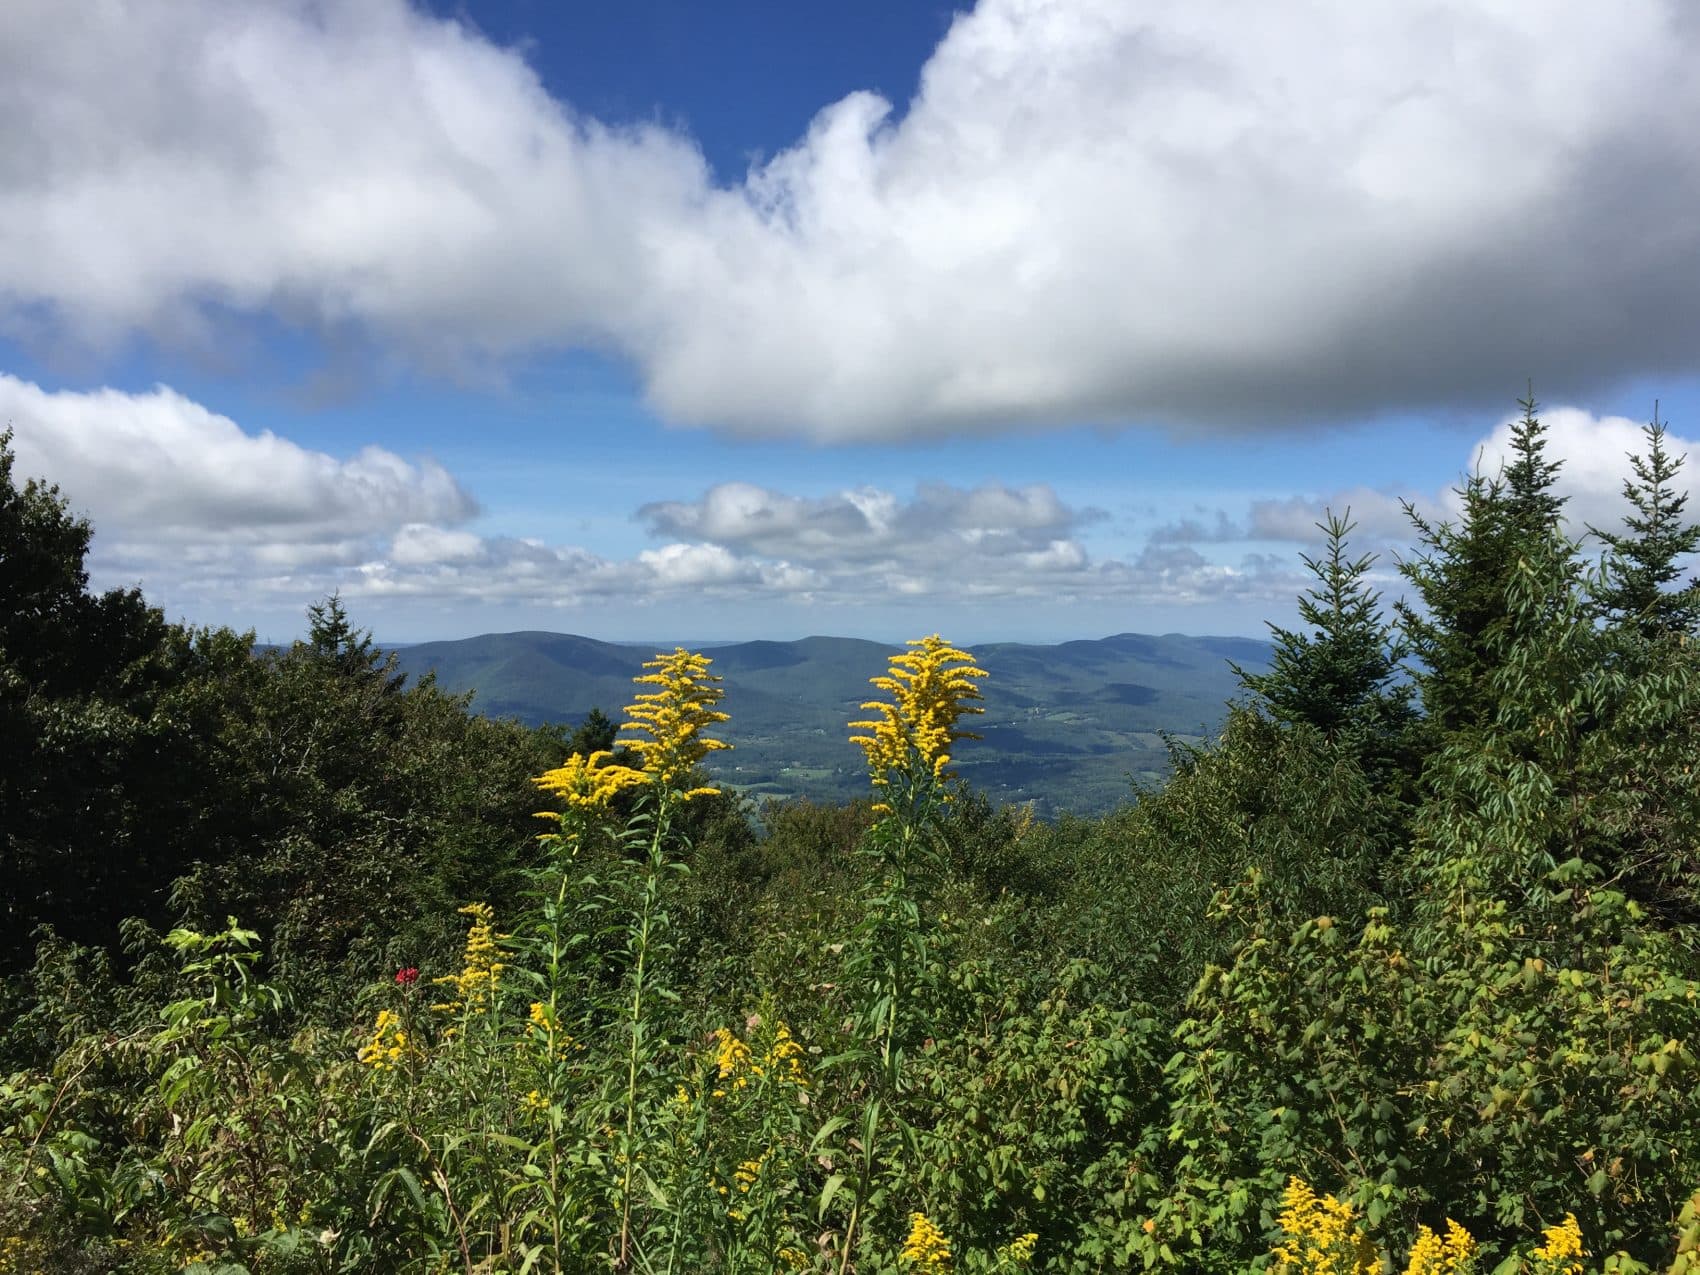 The view from Mount Greylock, the highest peak in the Berkshires. (Beth J. Harpaz/AP)